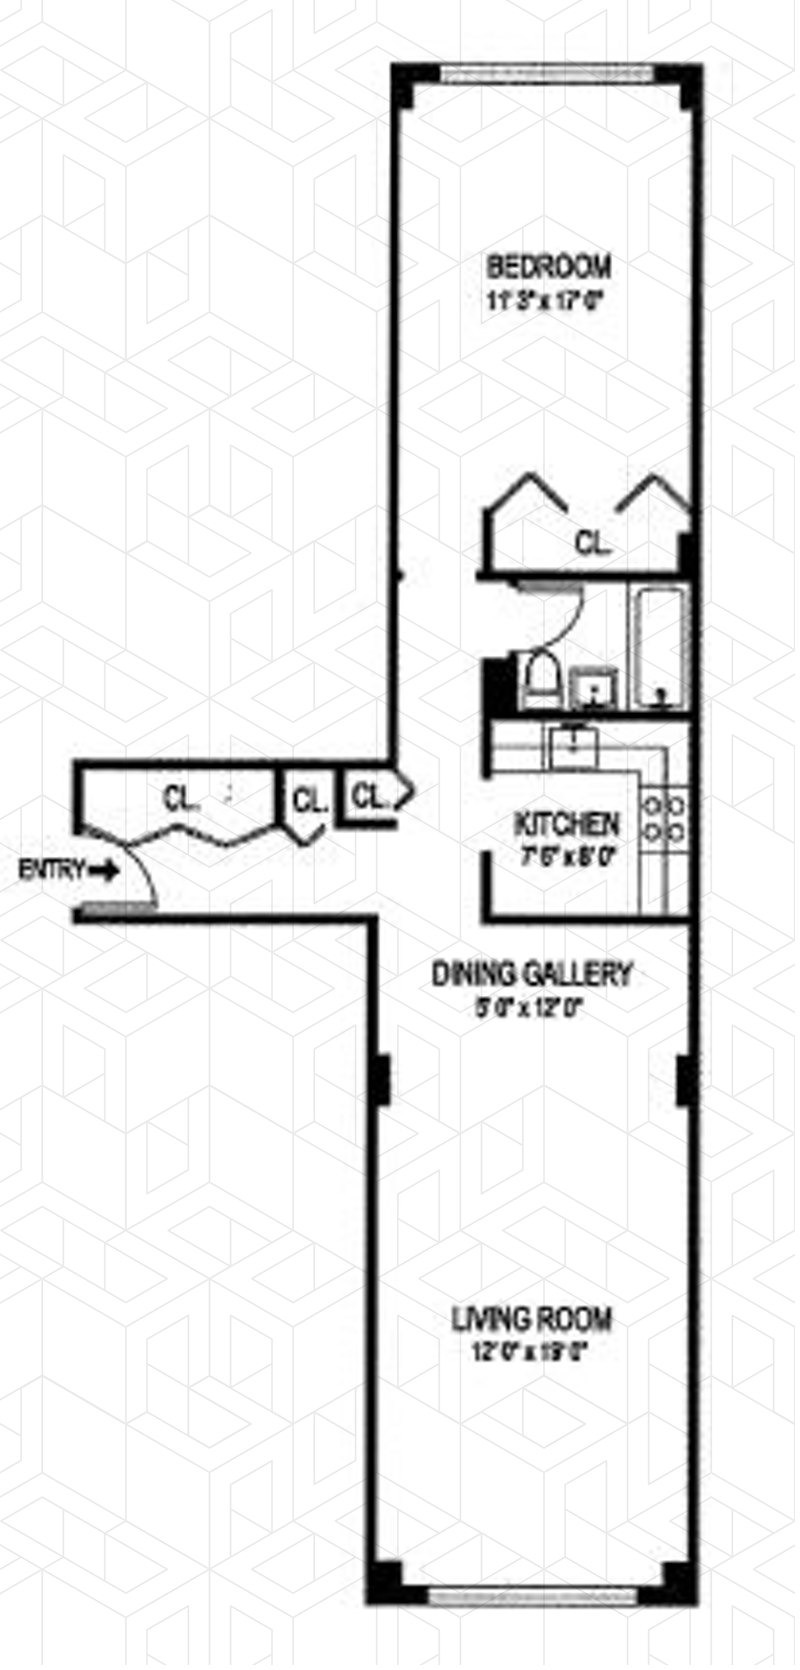 Floorplan for 222 East 19th Street, 9H